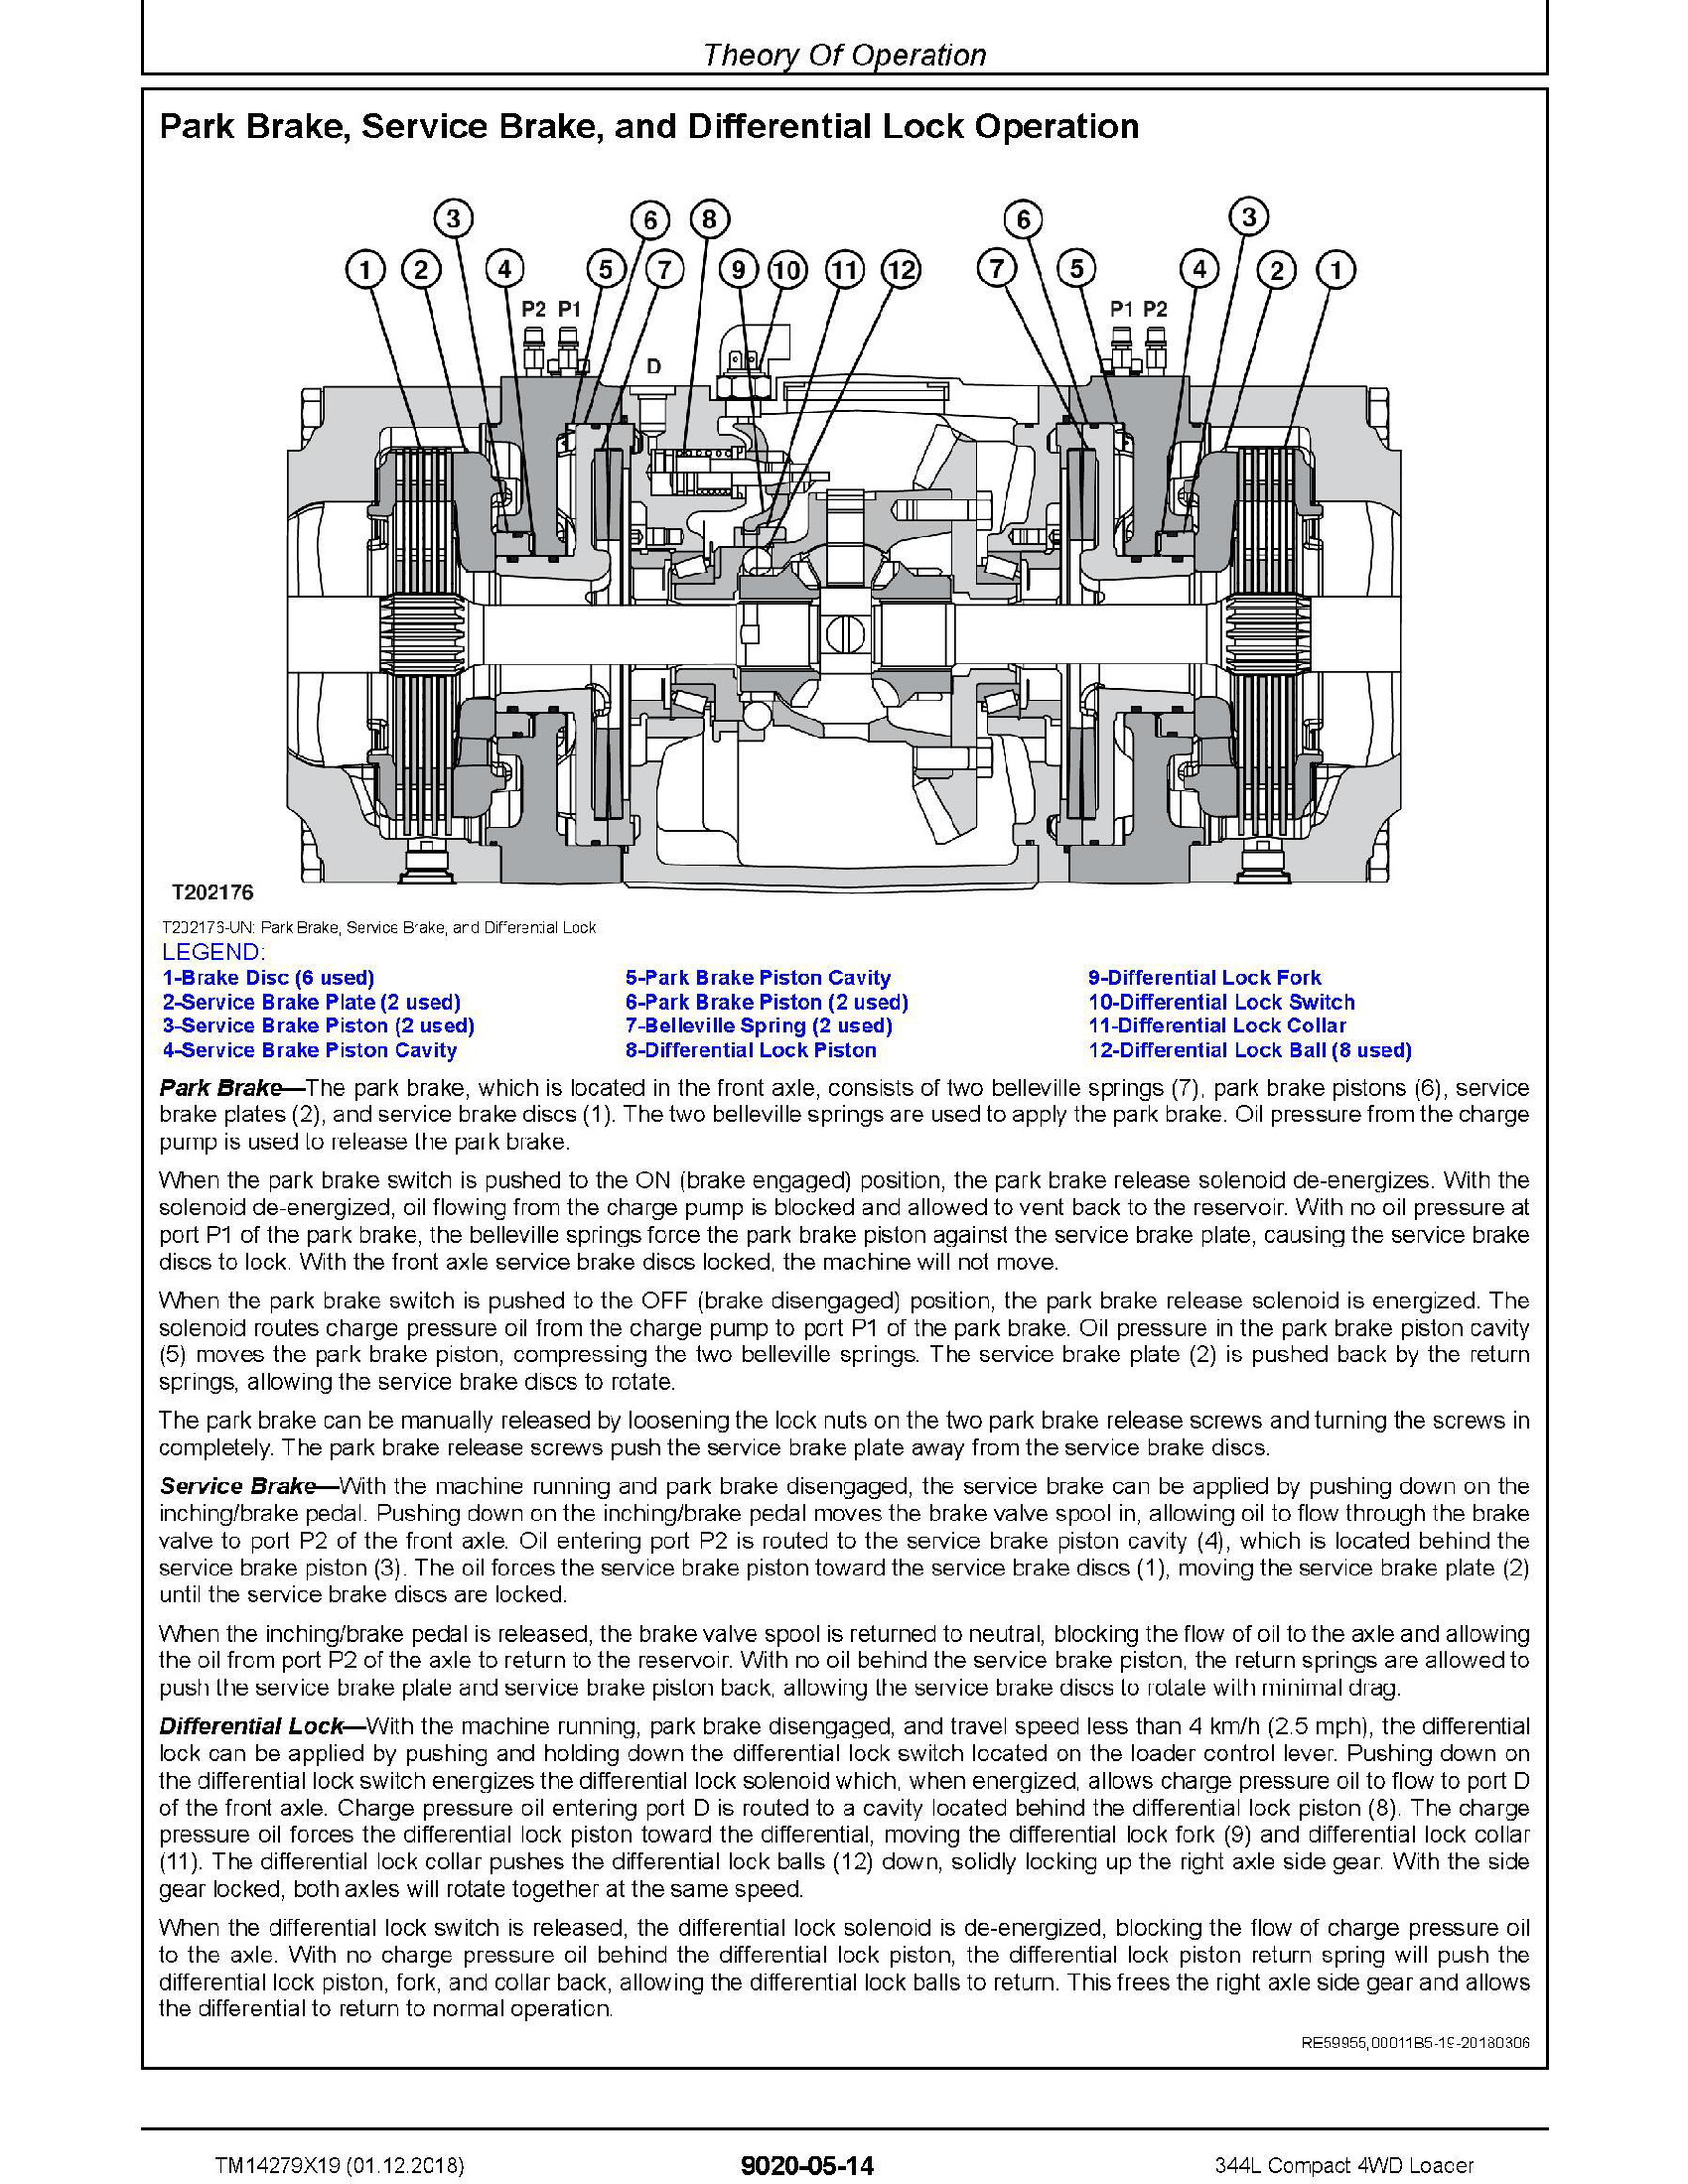 John Deere 1T0317G manual pdf